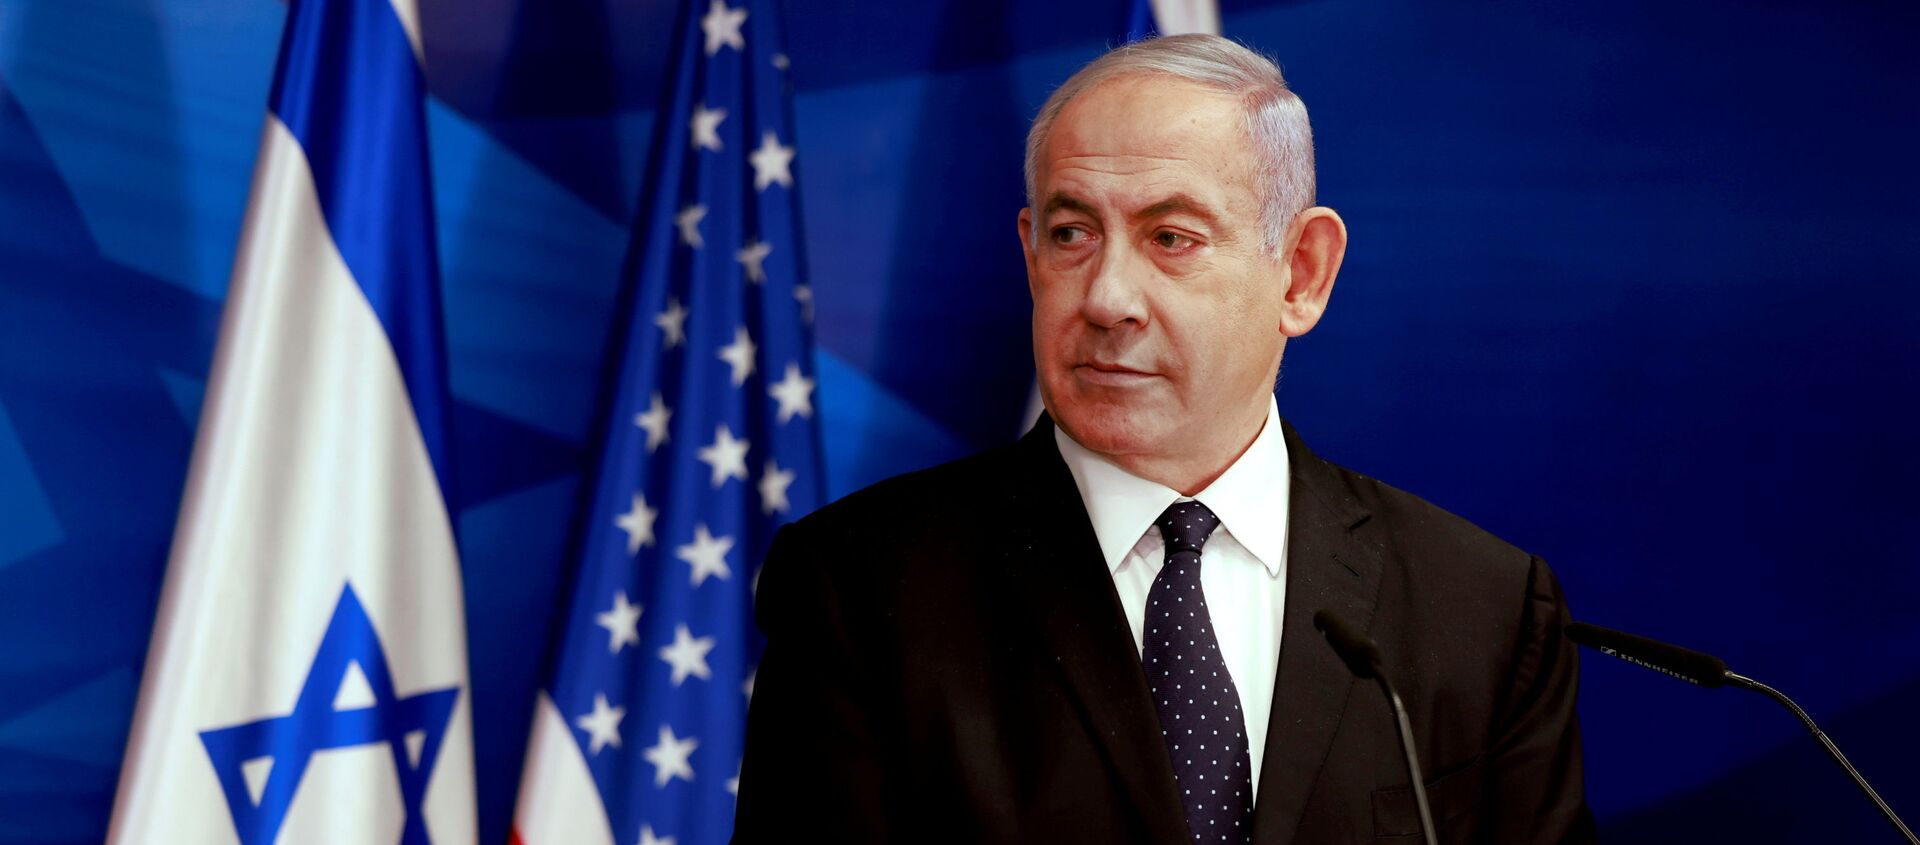 Israeli Prime Minister Benjamin Netanyahu looks at U.S. Secretary of State Antony Blinken (not pictured) during a joint news conference in Jerusalem, May 25, 2021. - Sputnik International, 1920, 01.06.2021